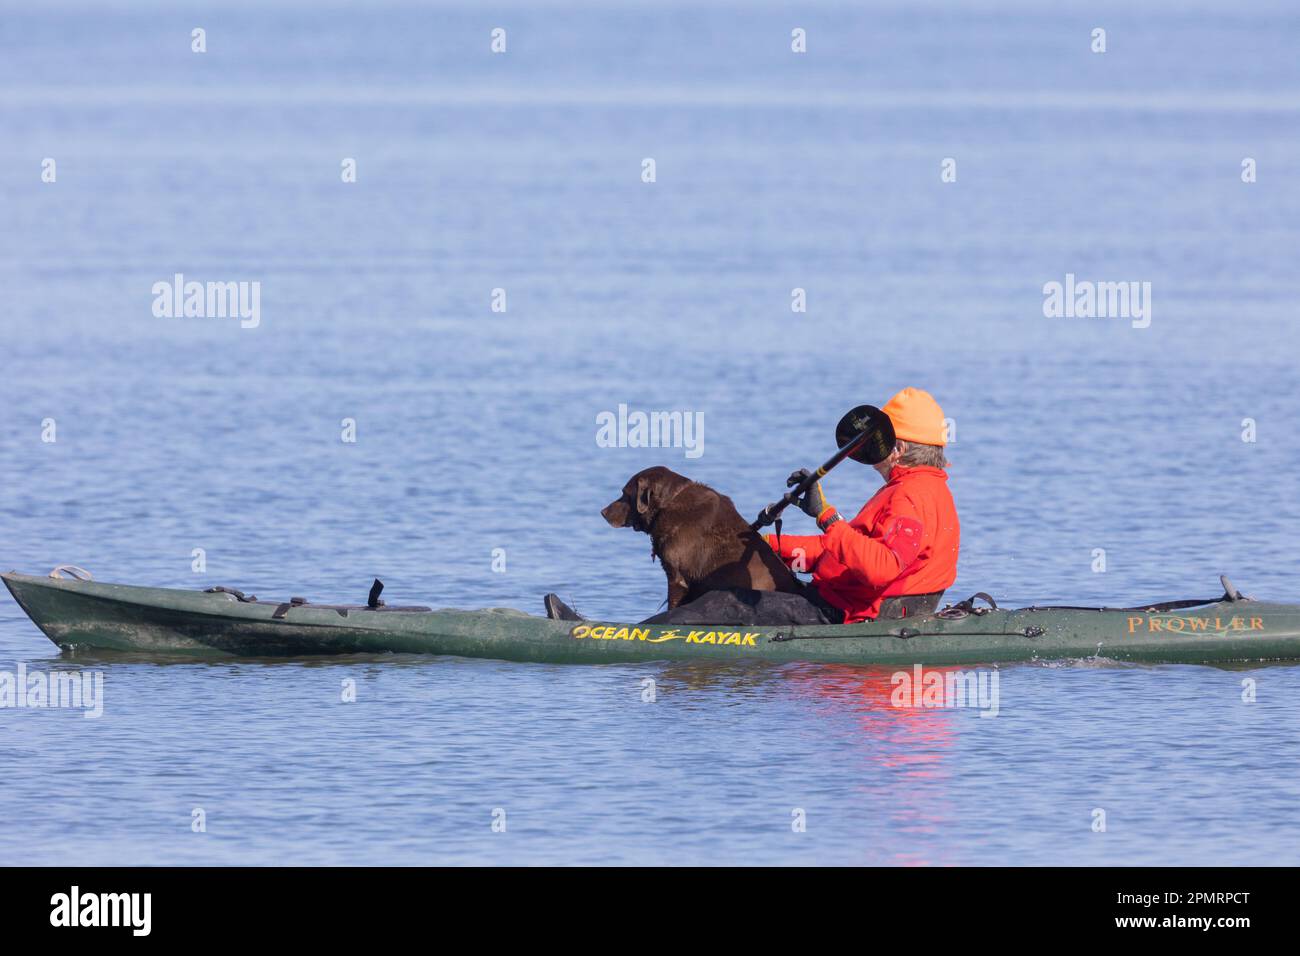 https://c8.alamy.com/comp/2PMRPCT/man-in-red-jacket-with-dog-on-ocean-kayak-2PMRPCT.jpg